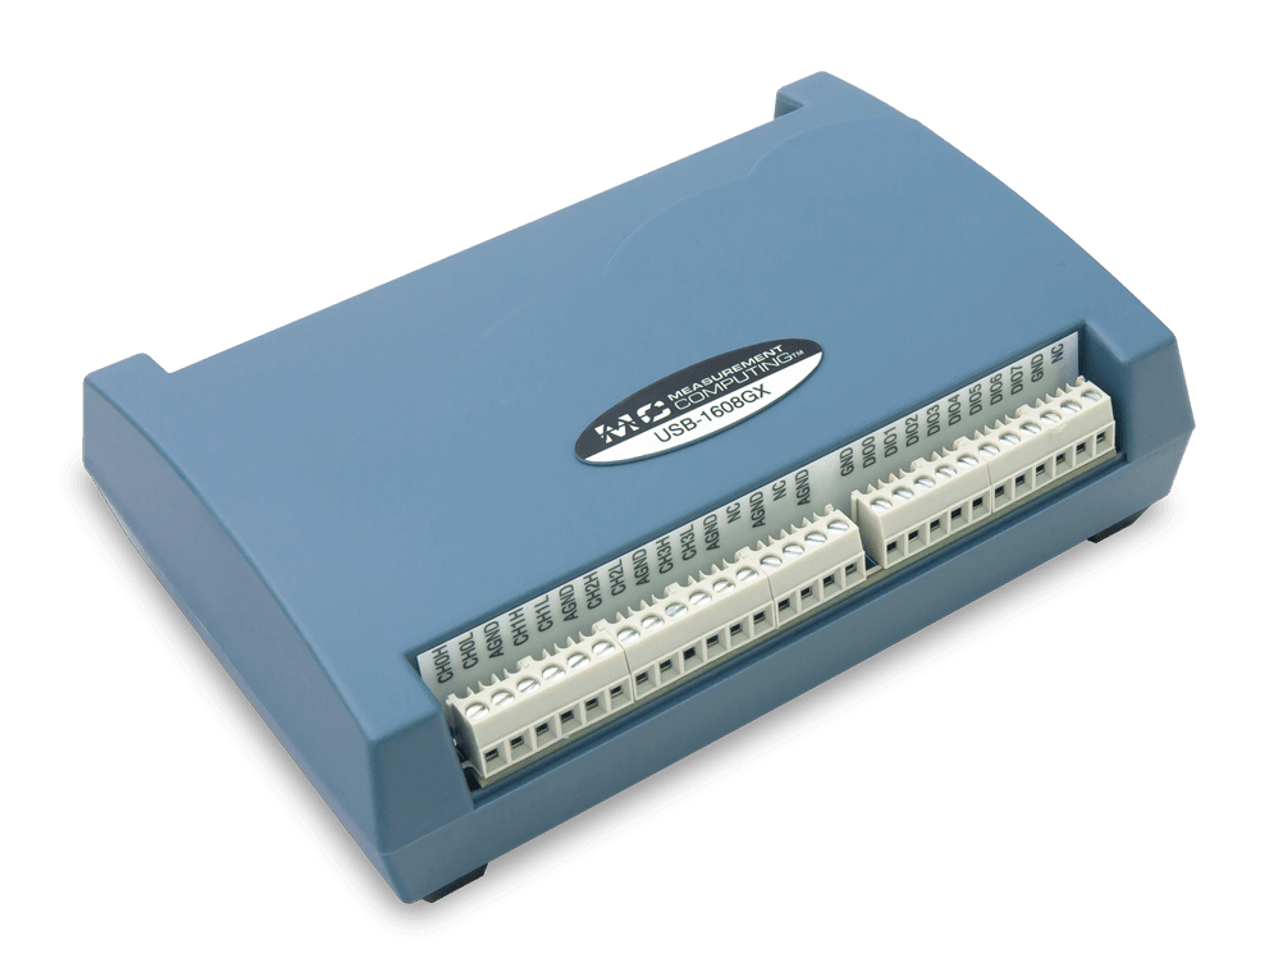 MCC USB-1608G Series: USB-1608G USB DAQ Devices